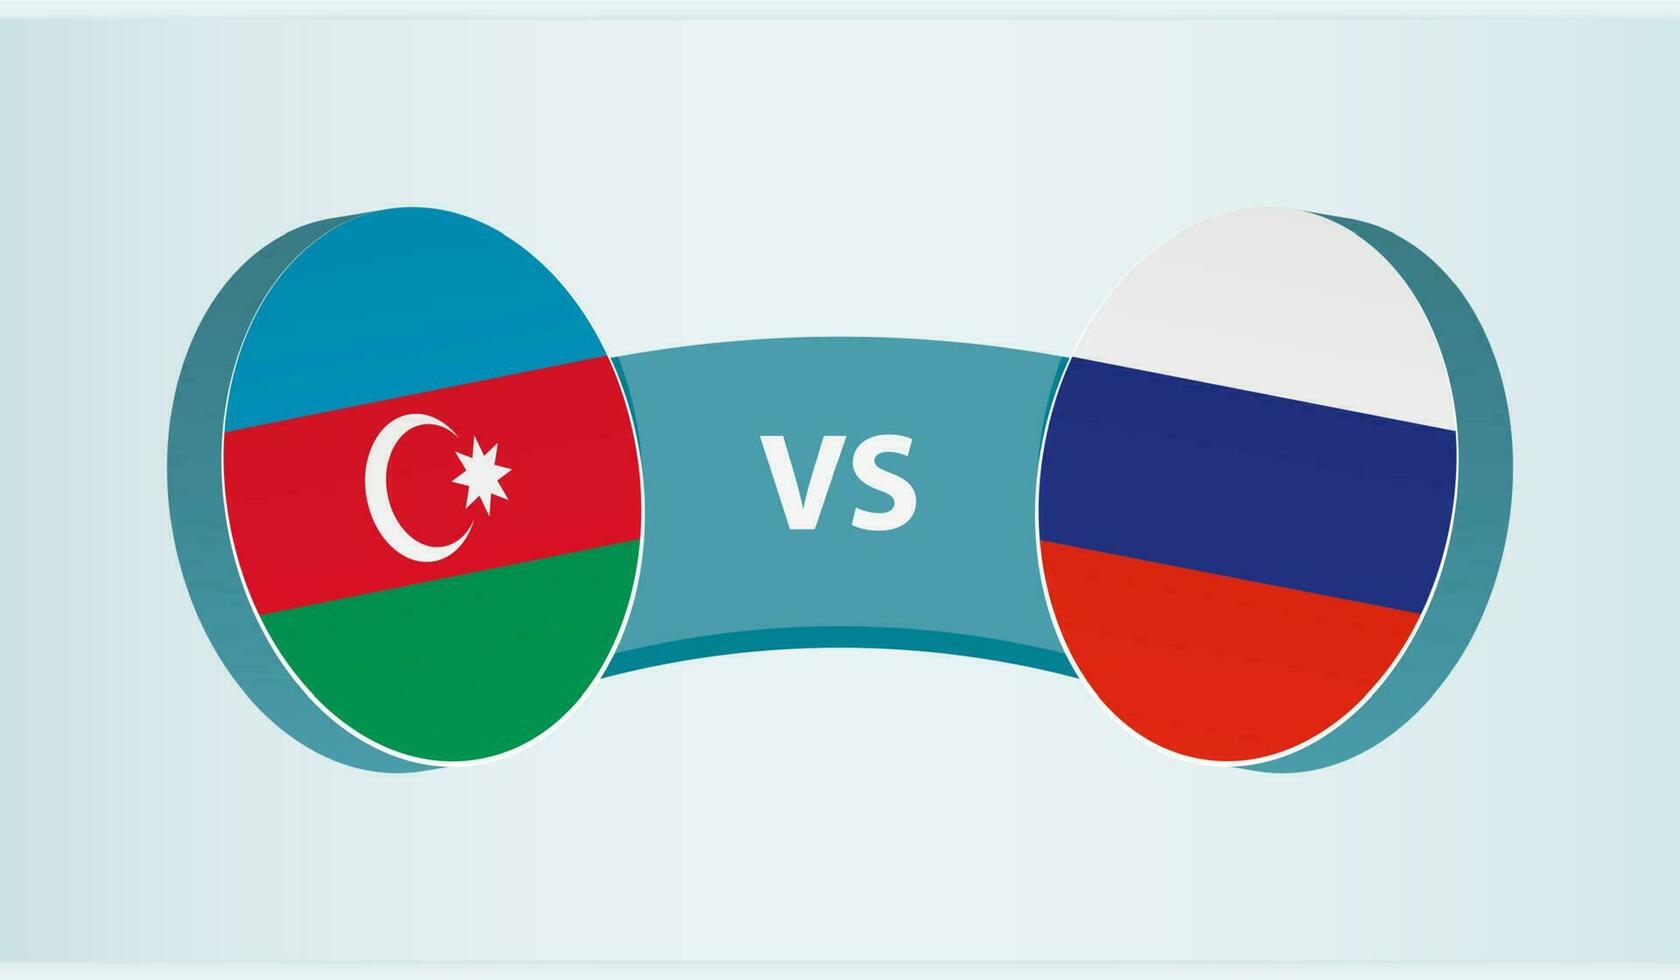 Azerbaijan versus Russia, team sports competition concept. vector